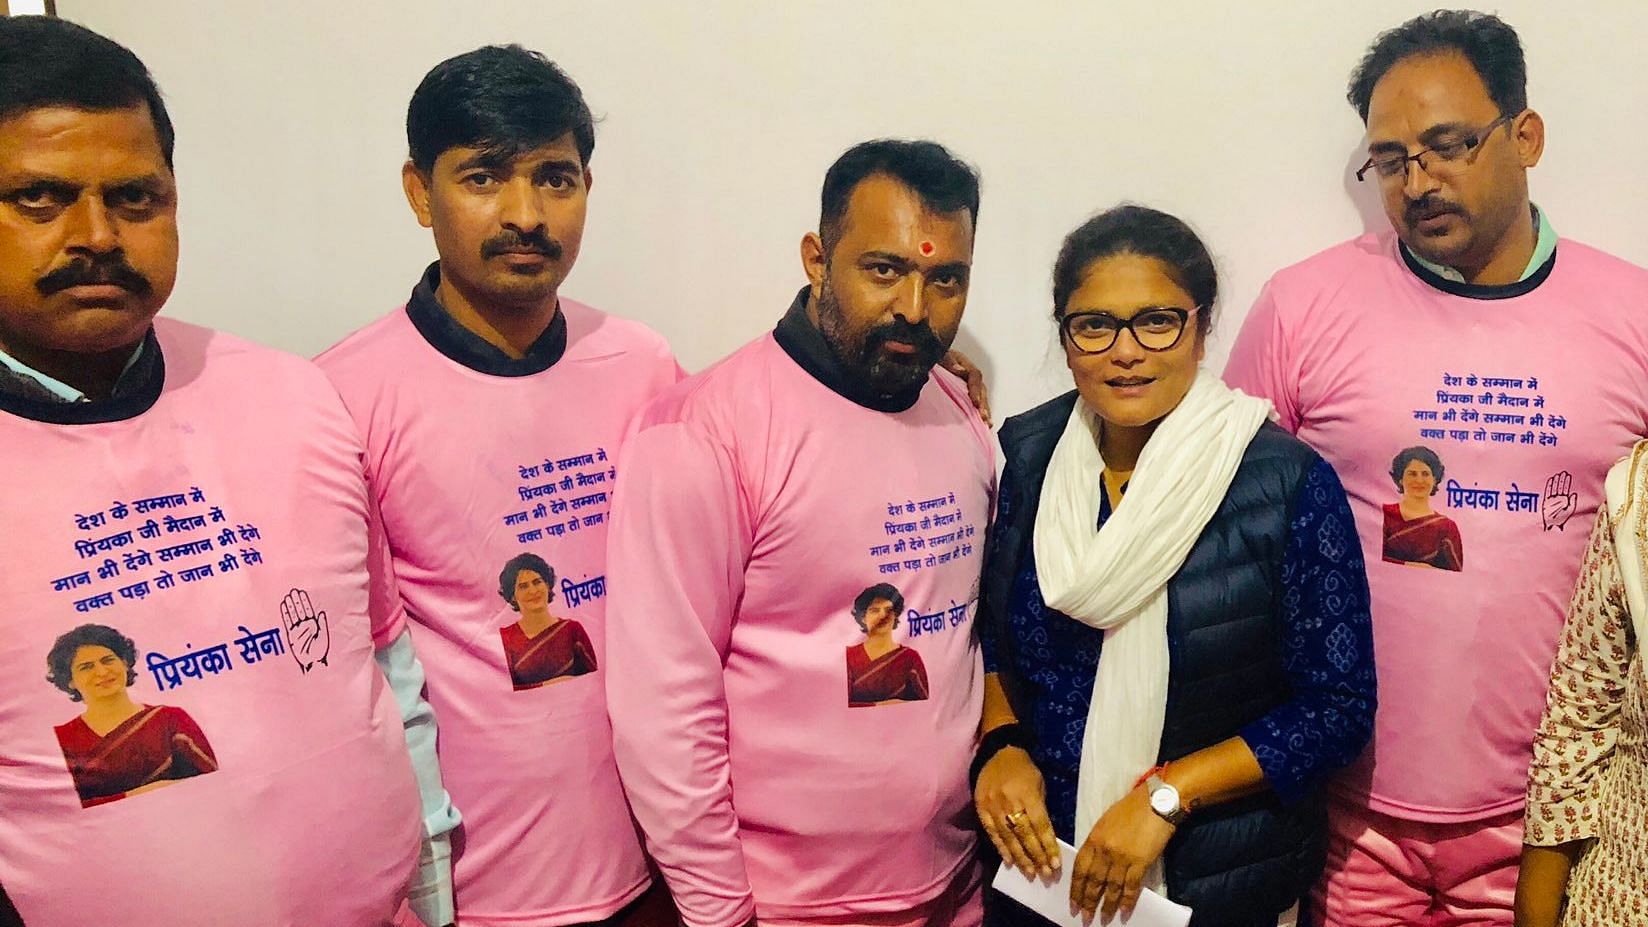 For Priyanka Gandhi they wear pink!